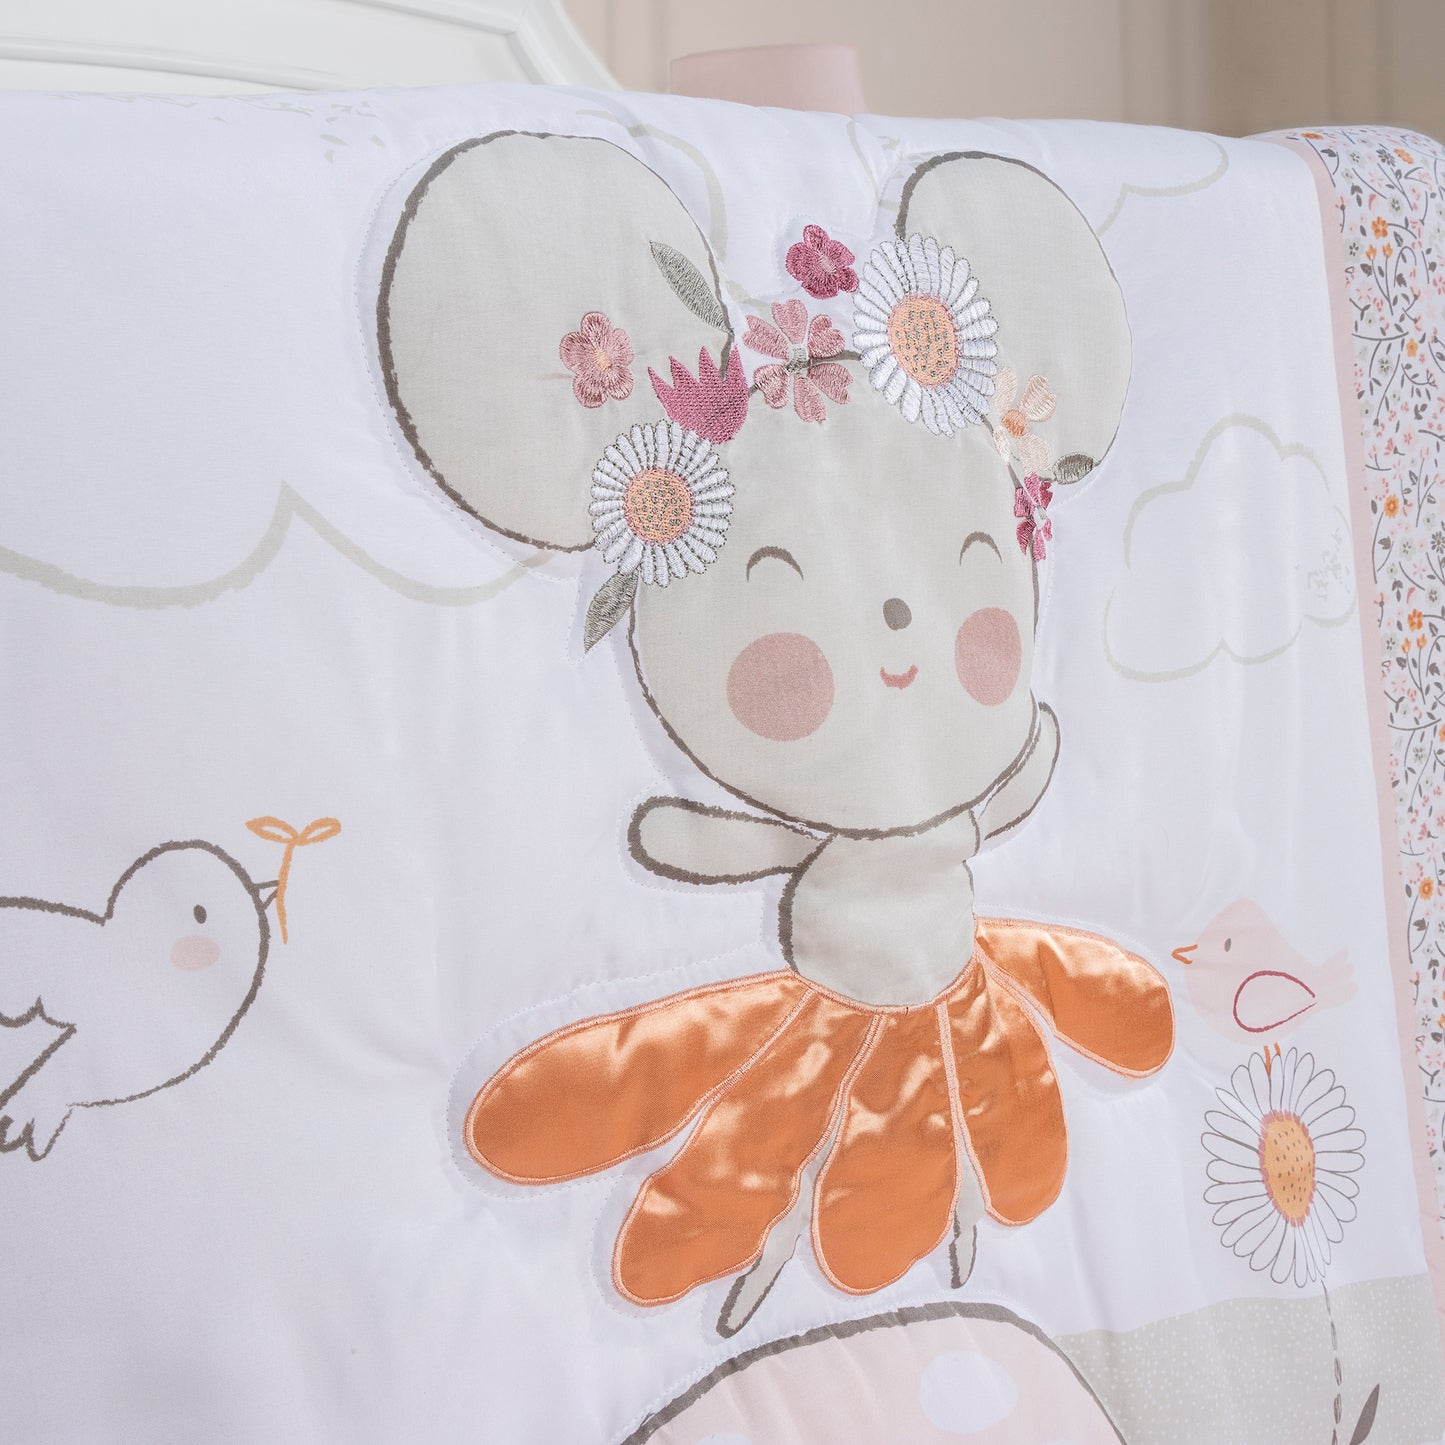  Dancing Mouse 4 Piece Crib Bedding Set by Sammy & Lou®; applique mouse design